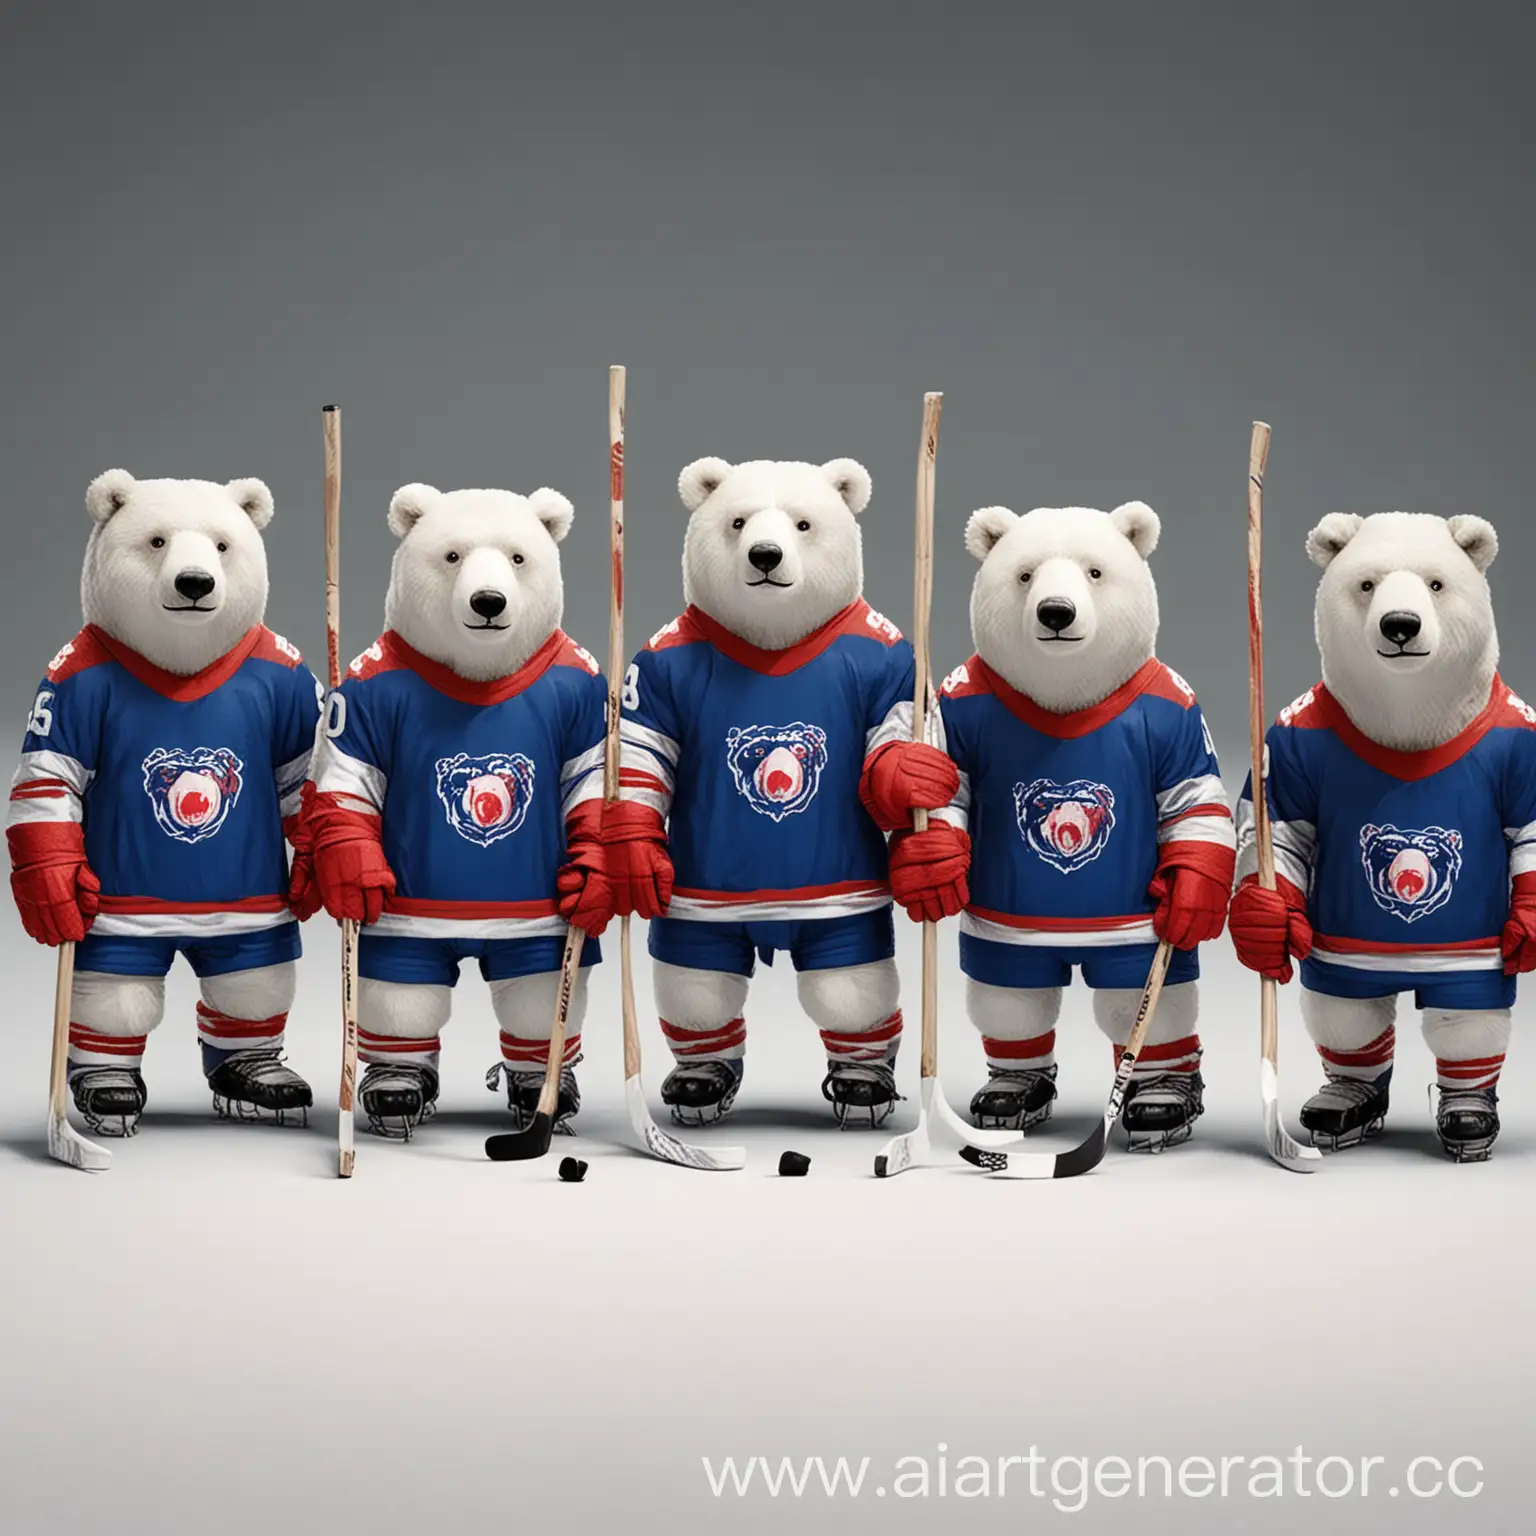 Ten-White-Bears-Hockey-Team-in-Minimalist-WhiteBlueRed-Uniforms